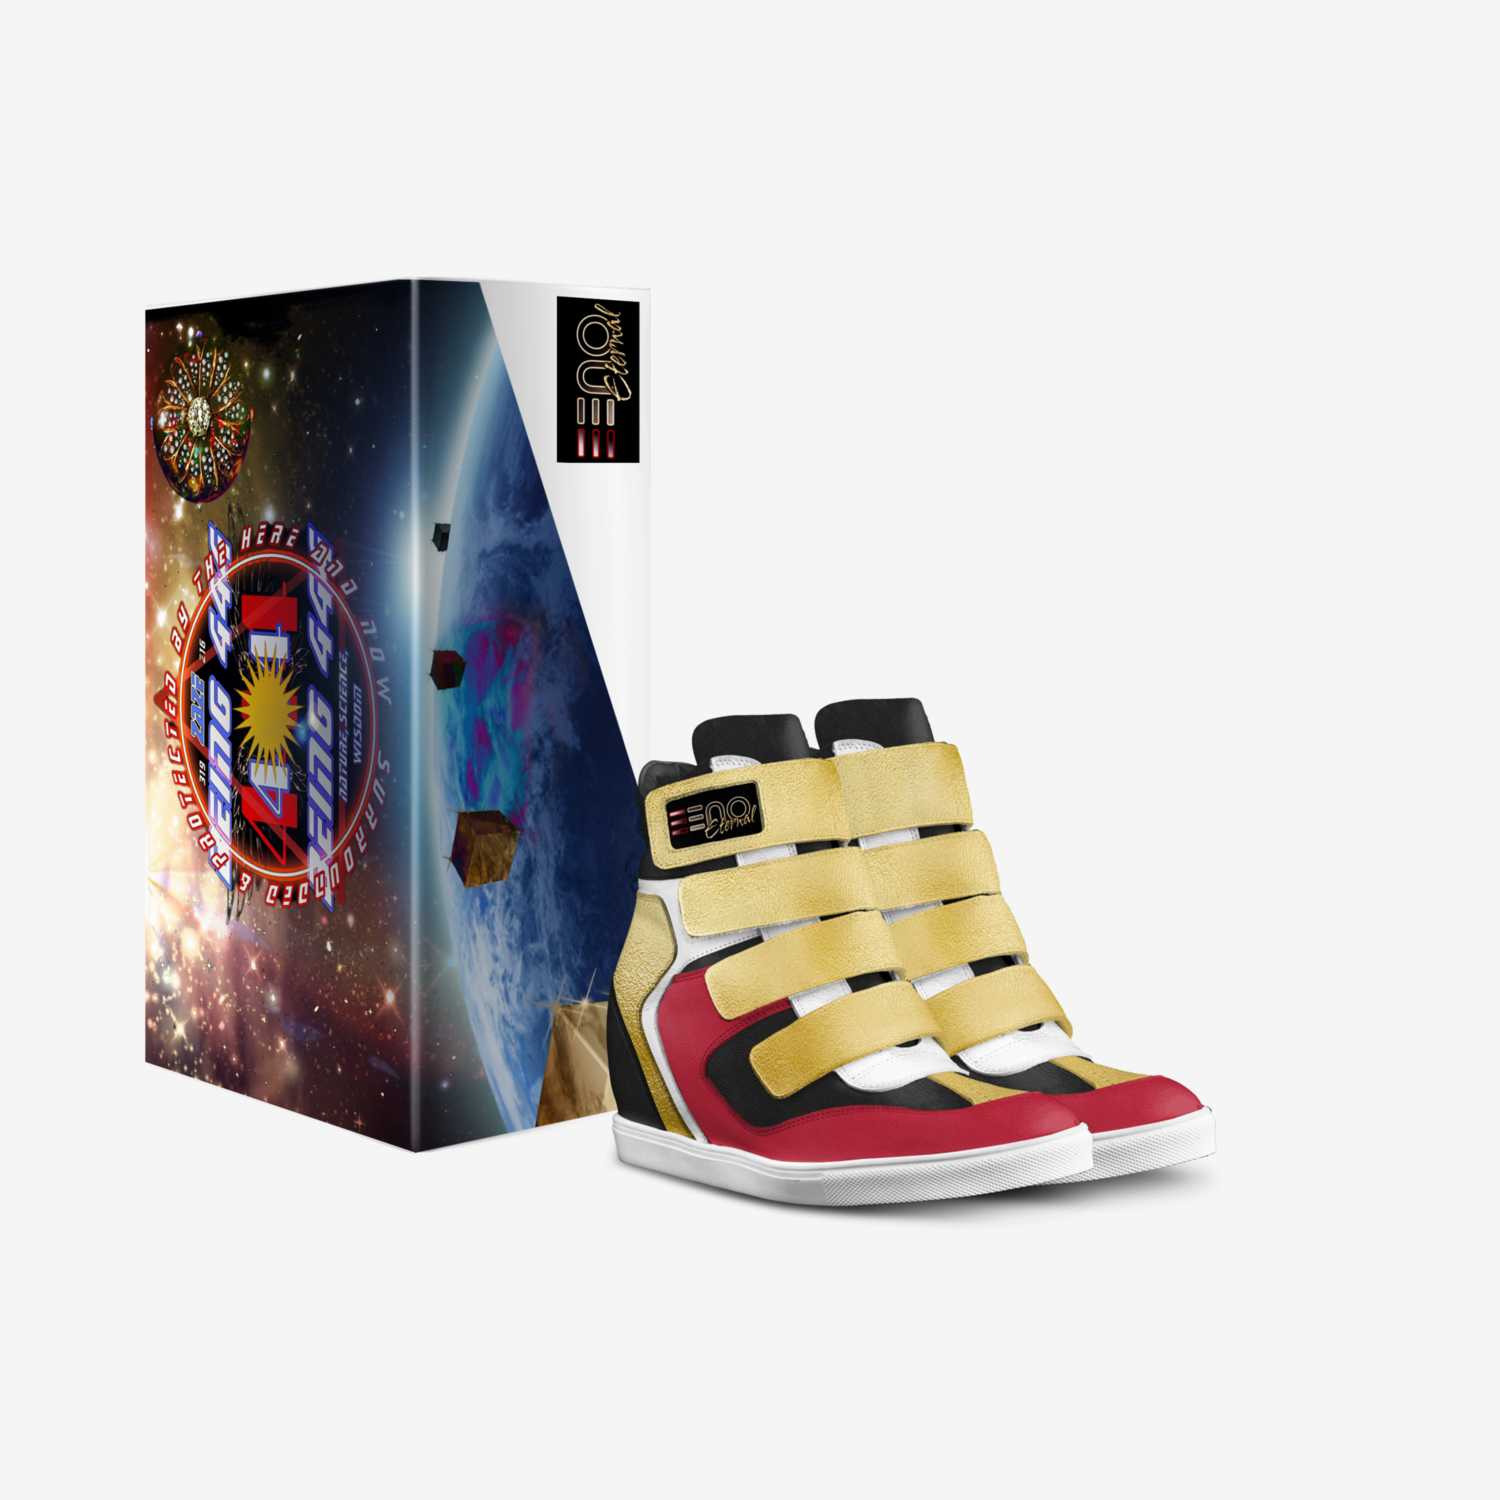 ENO ZAZE custom made in Italy shoes by Redstar Mafia | Box view